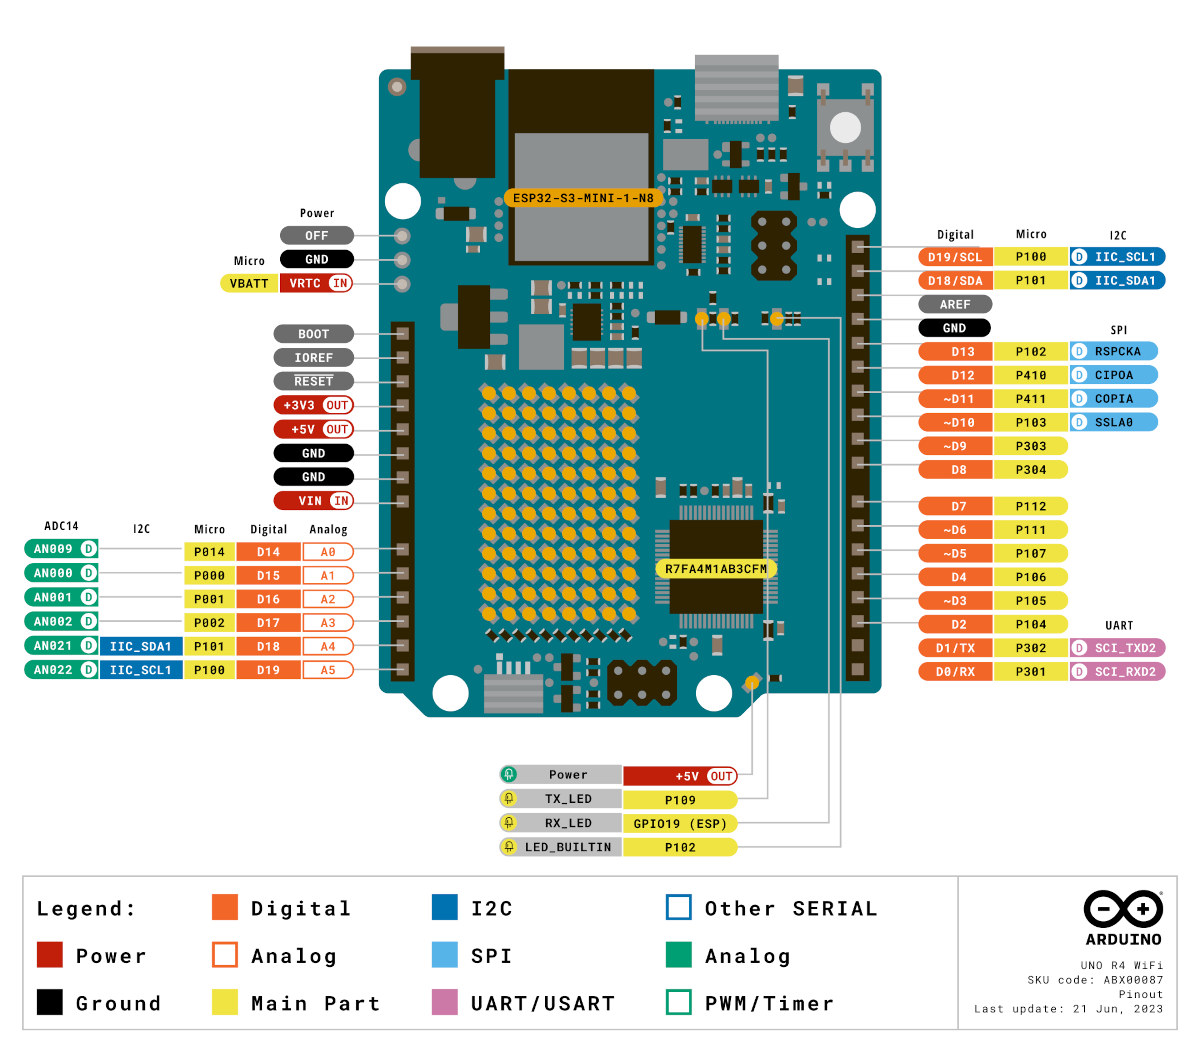 Arduino Uno R4 Minima and R4 WiFi - A Generational Upgrade